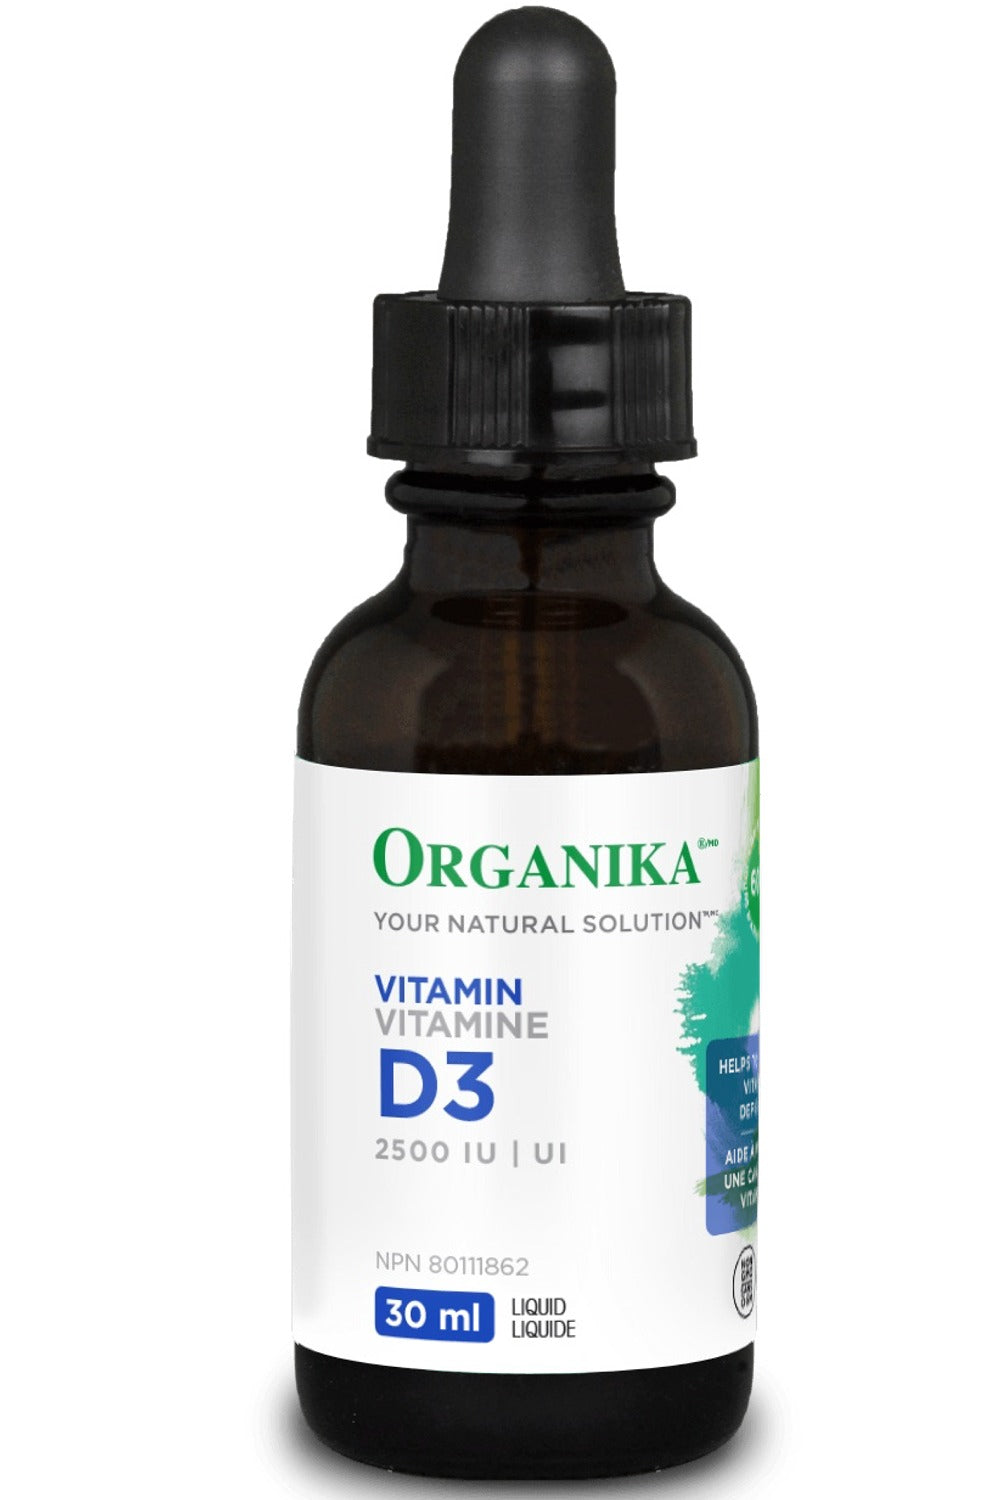 ORGANIKA Vitamin D3 (2500 IU - 30 ml)